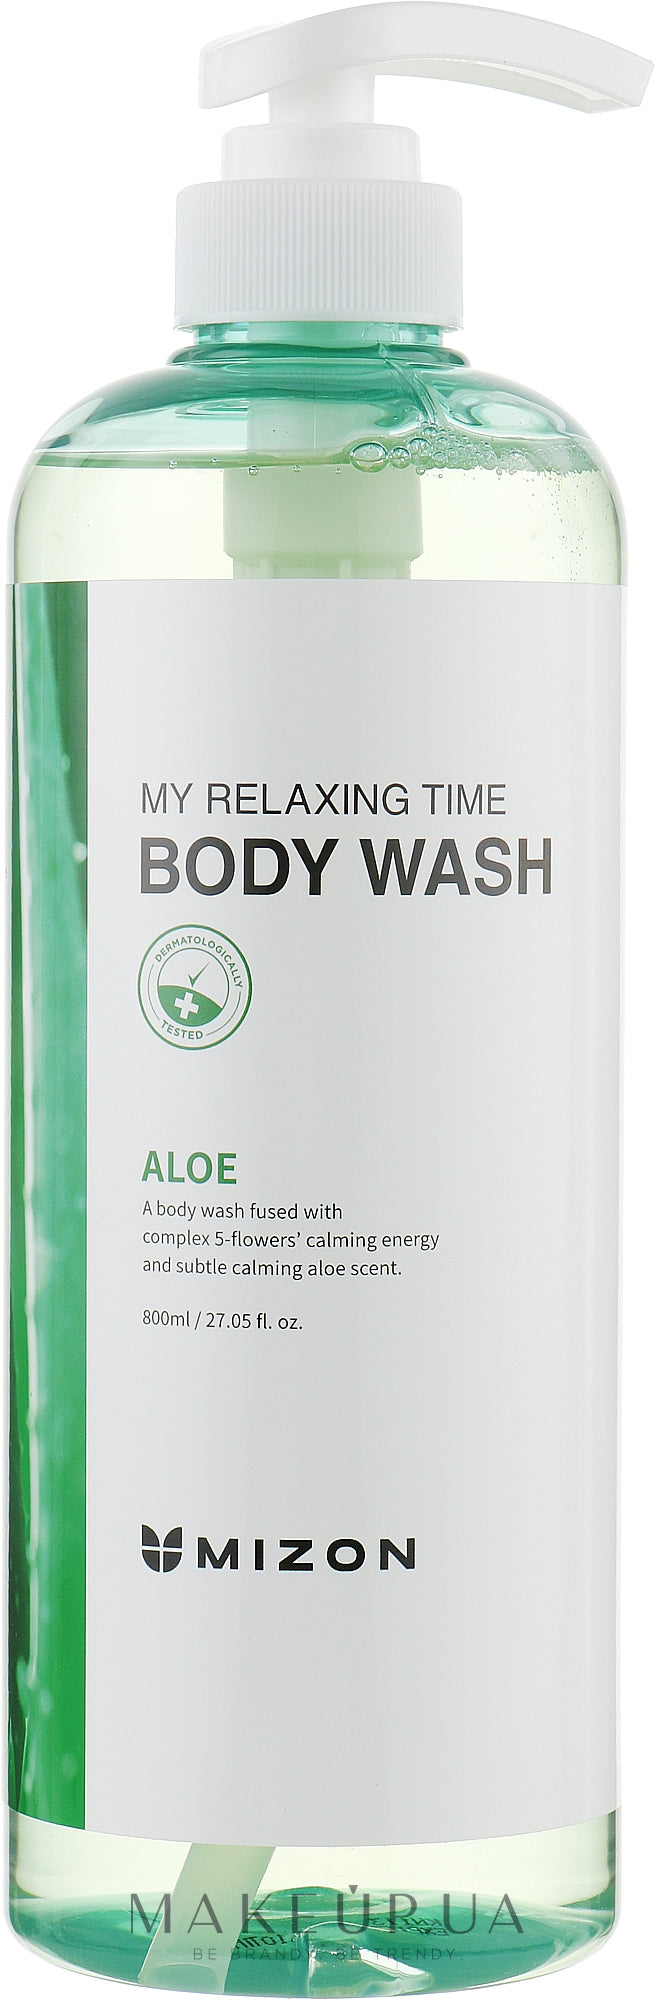 Mizon My Relaxing Time Body Wash Aloe dušo gelis su alavijais 800 ml